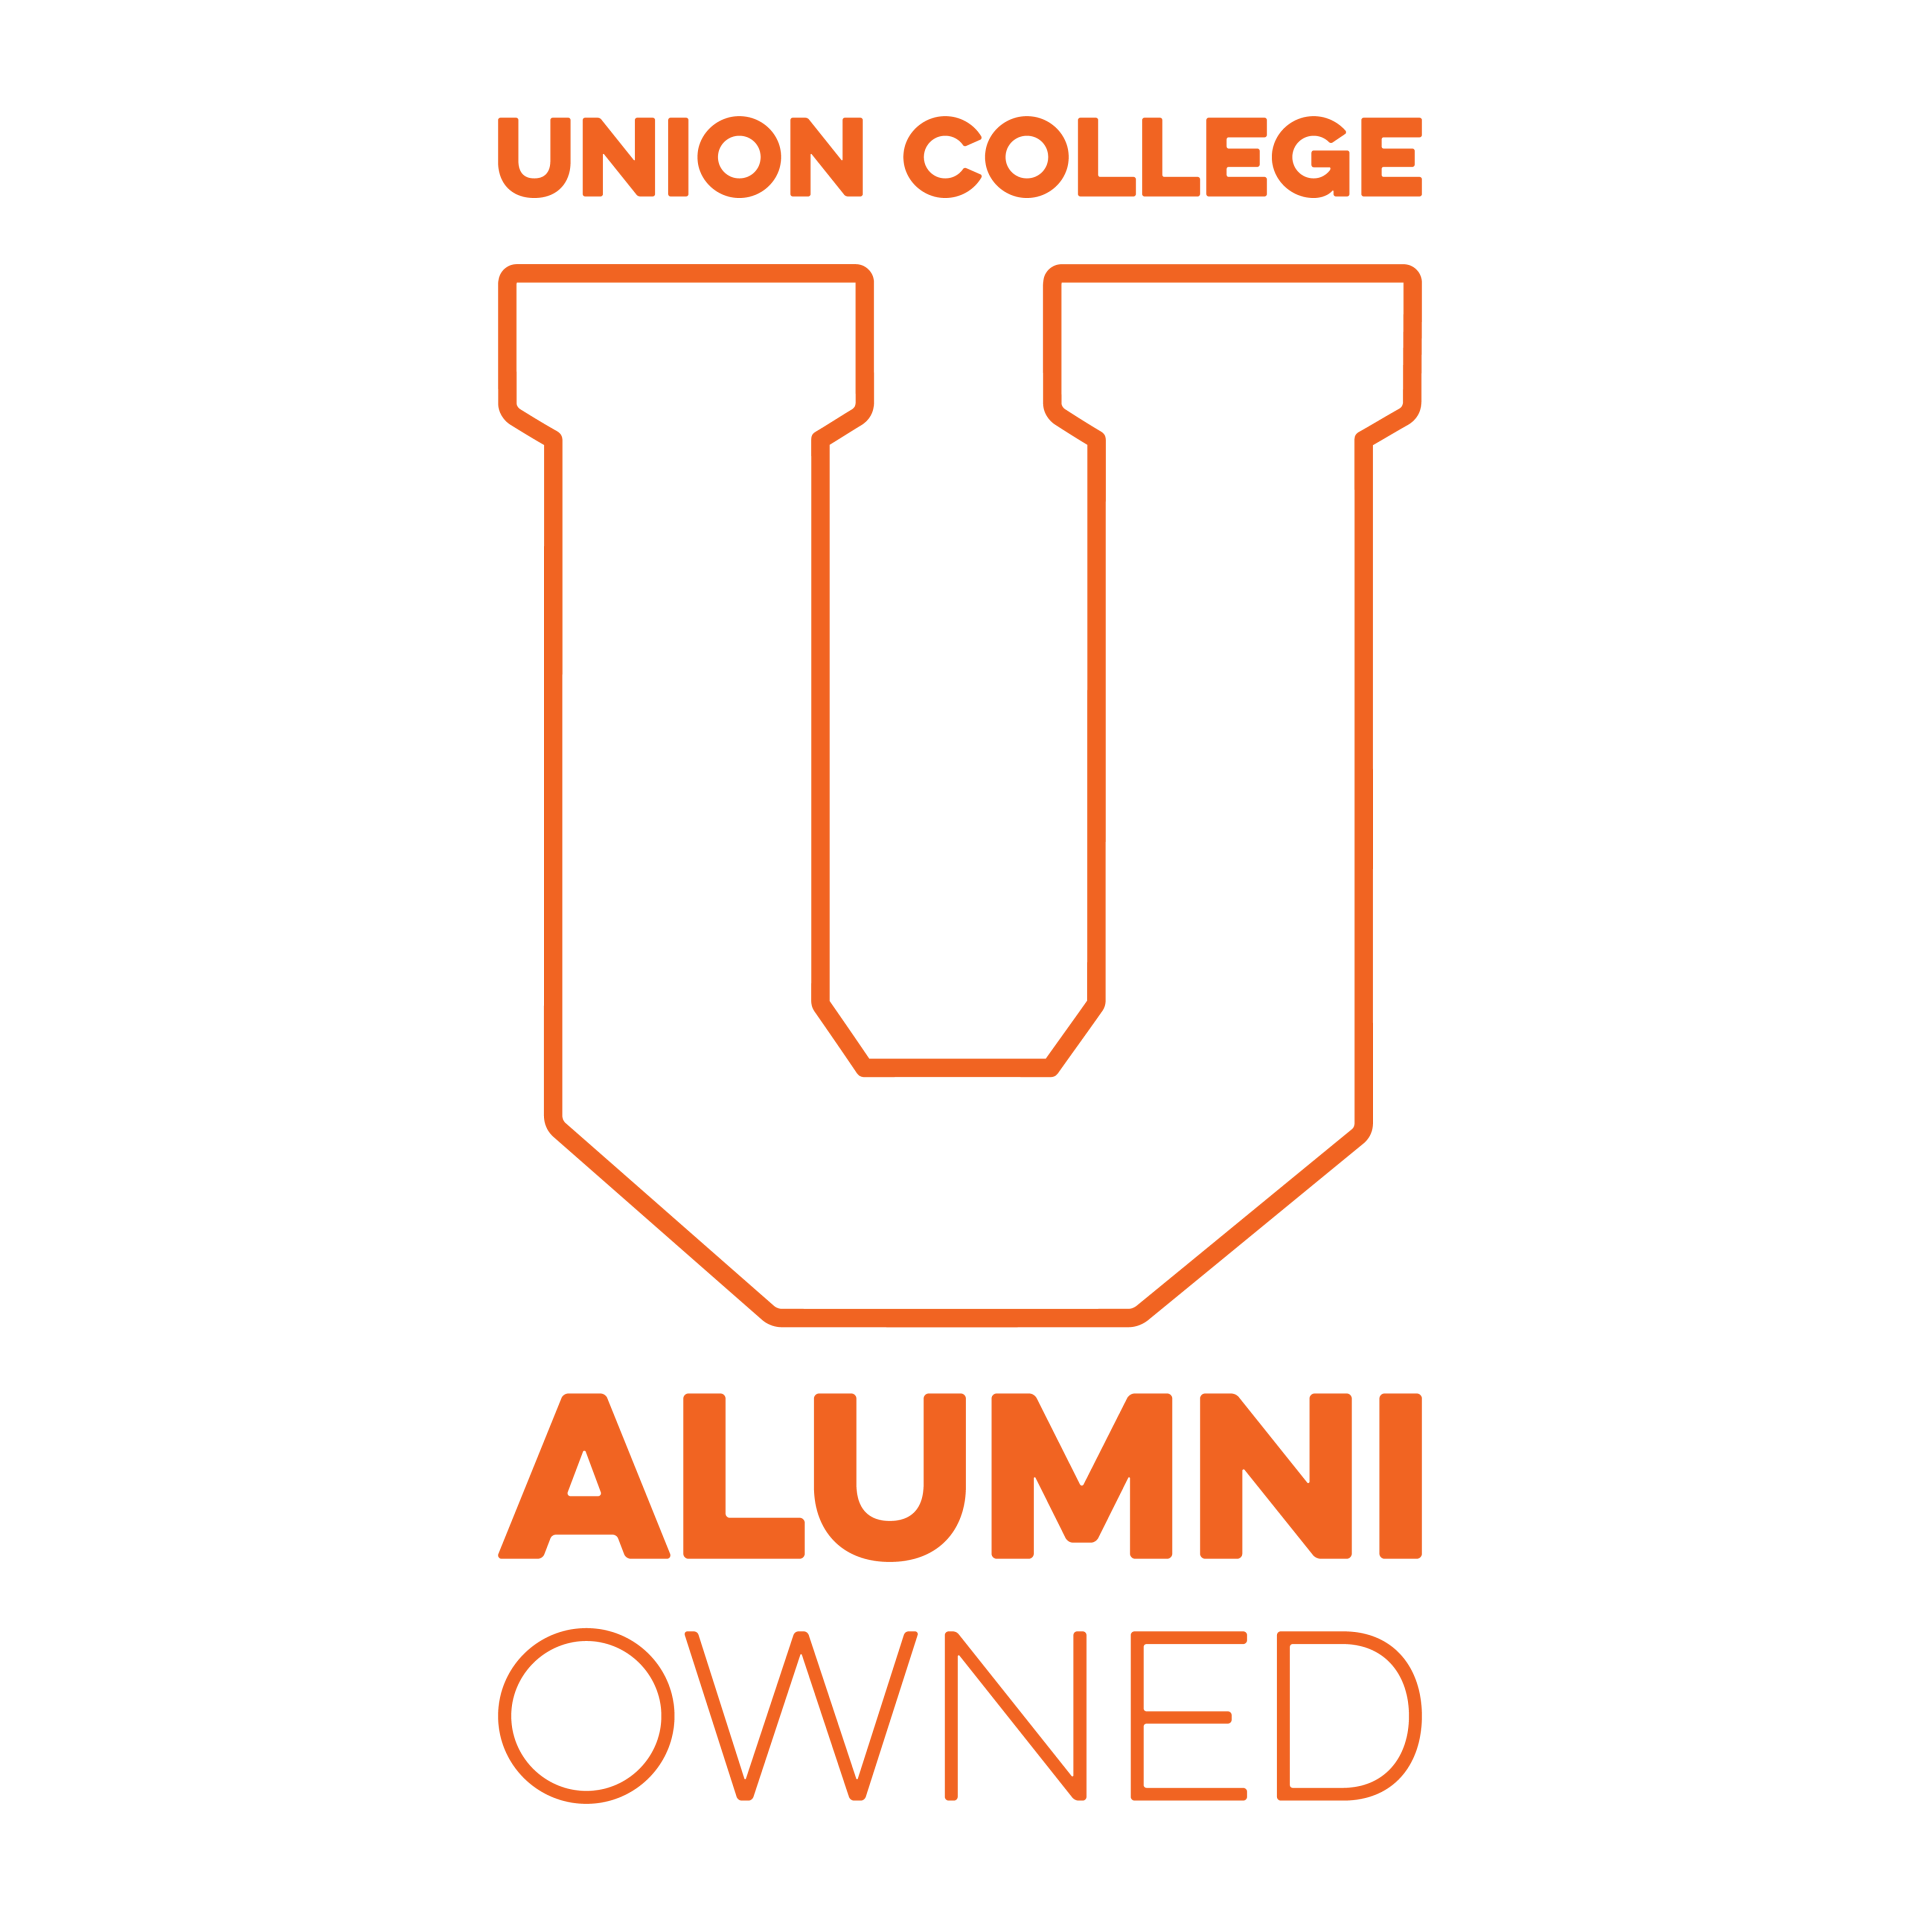 Alumni Union College